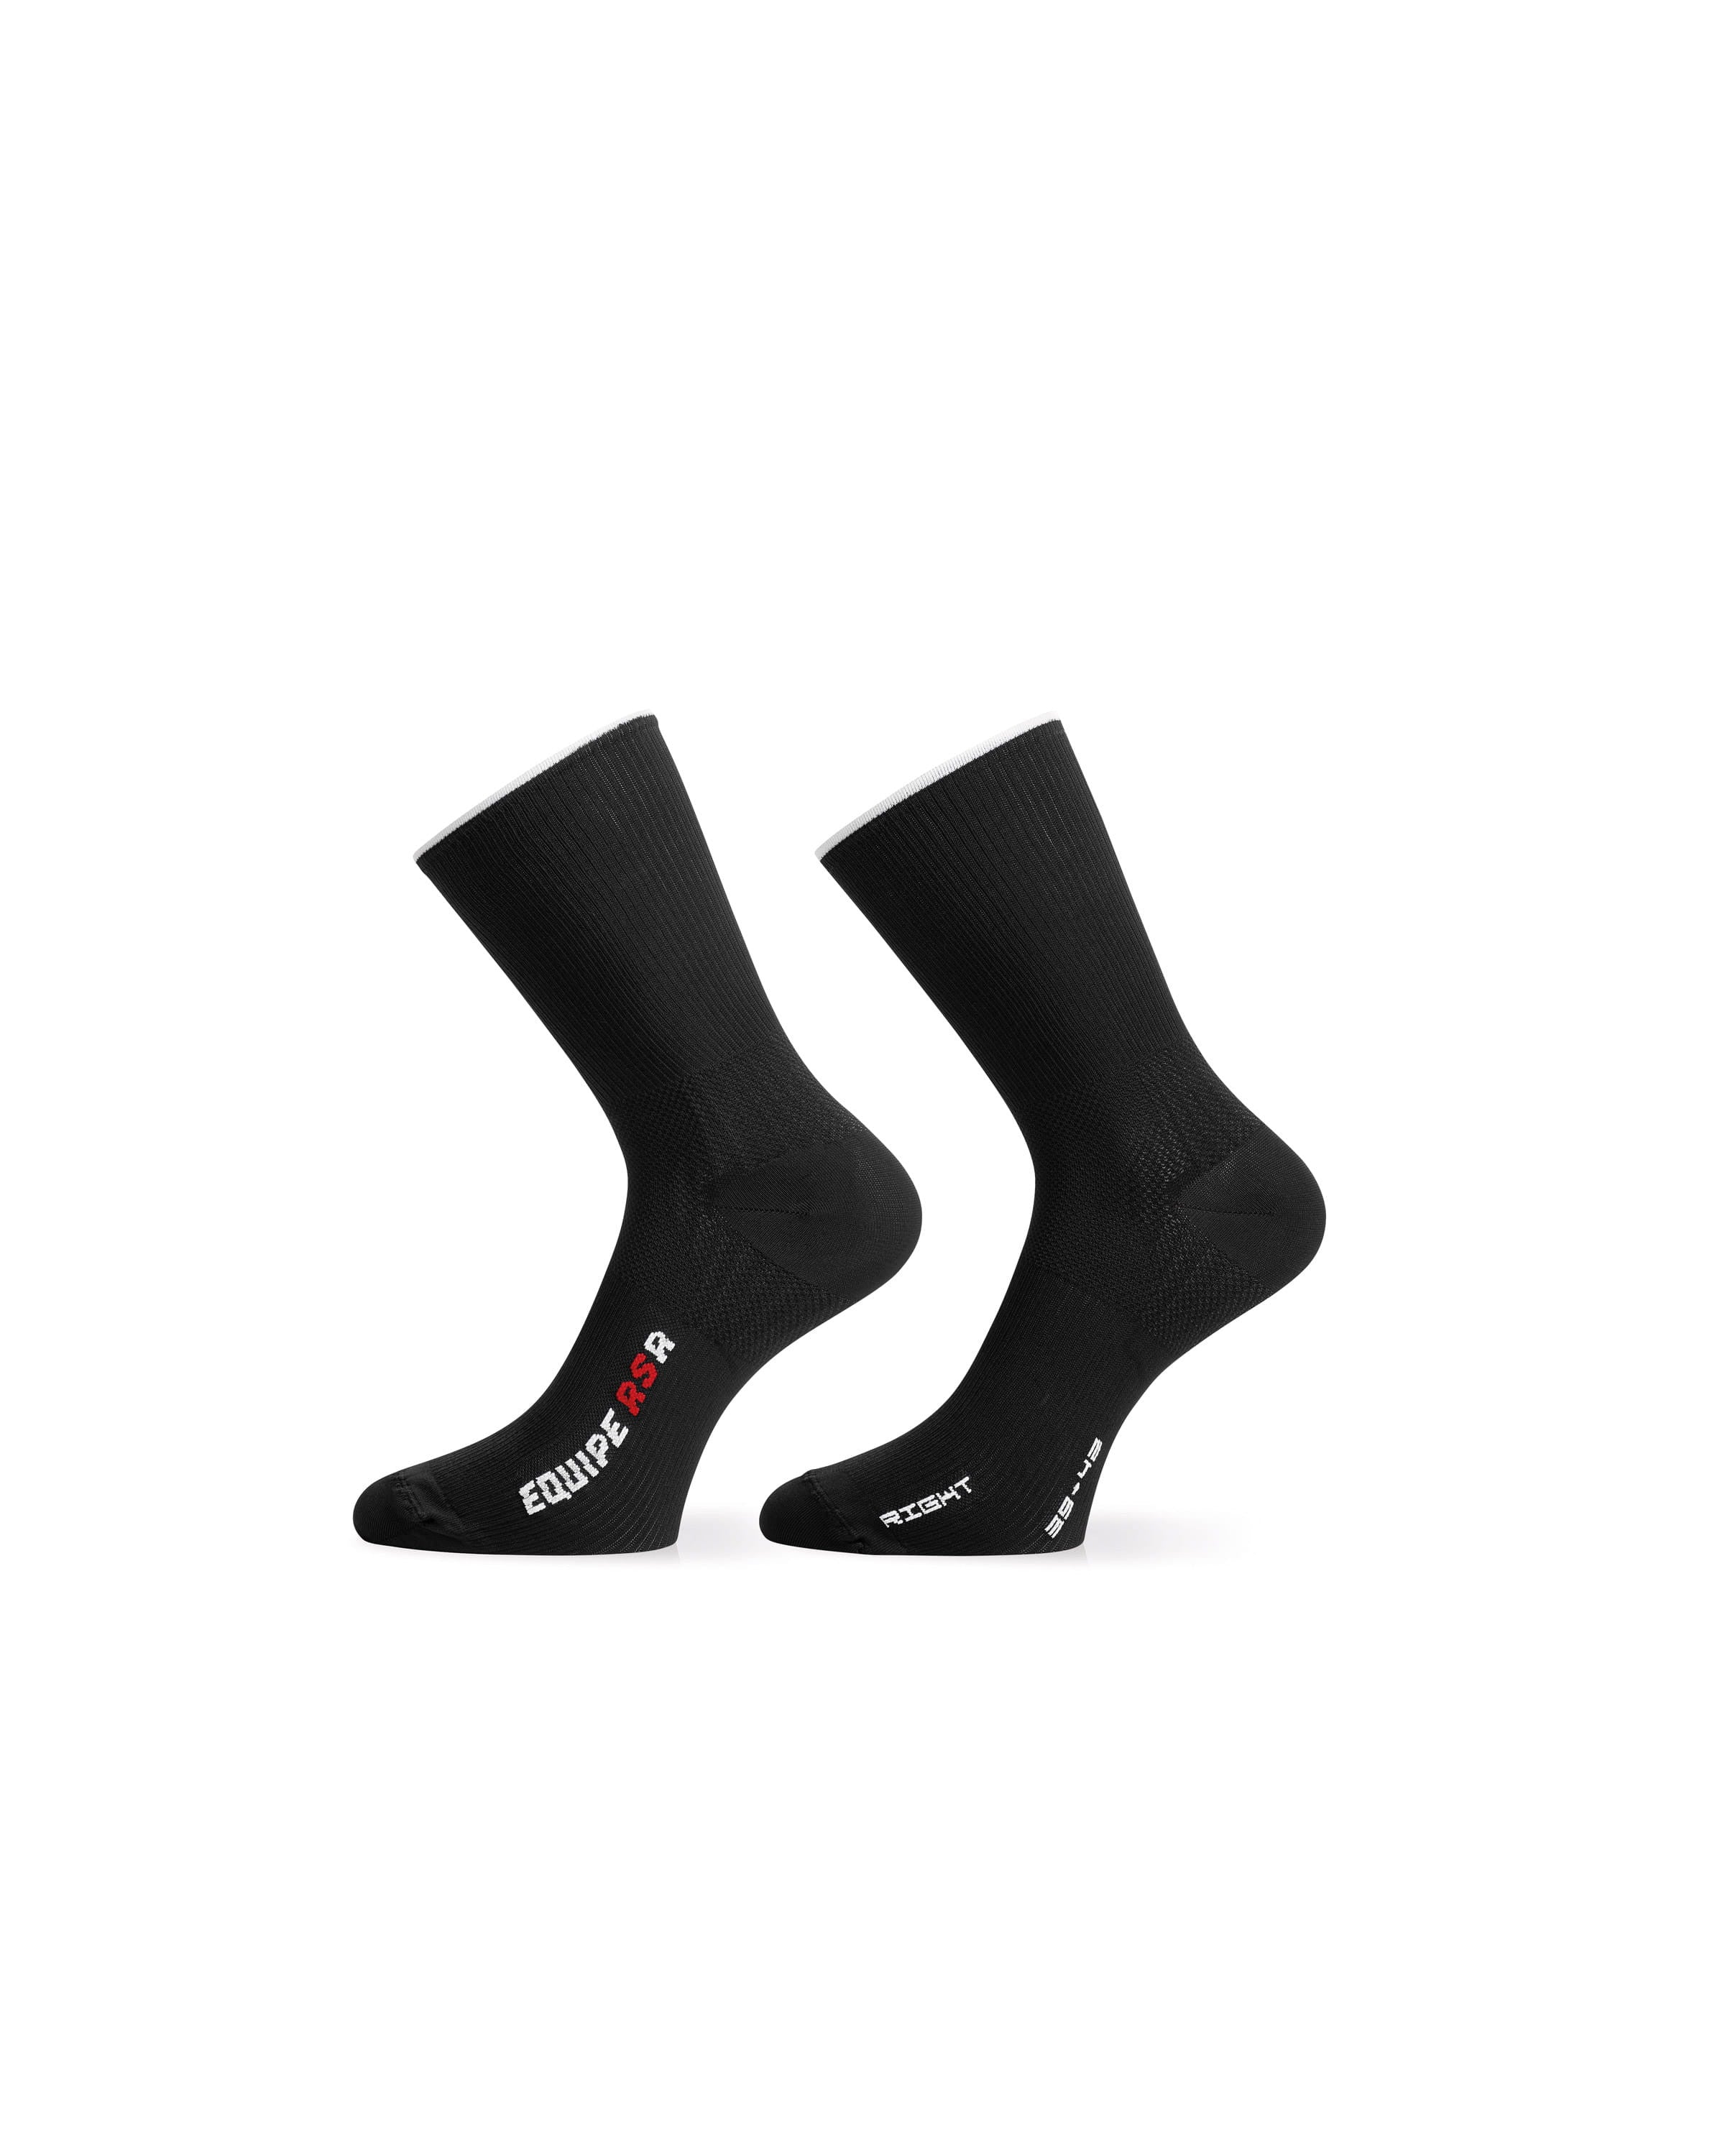 RSR Socks - Black